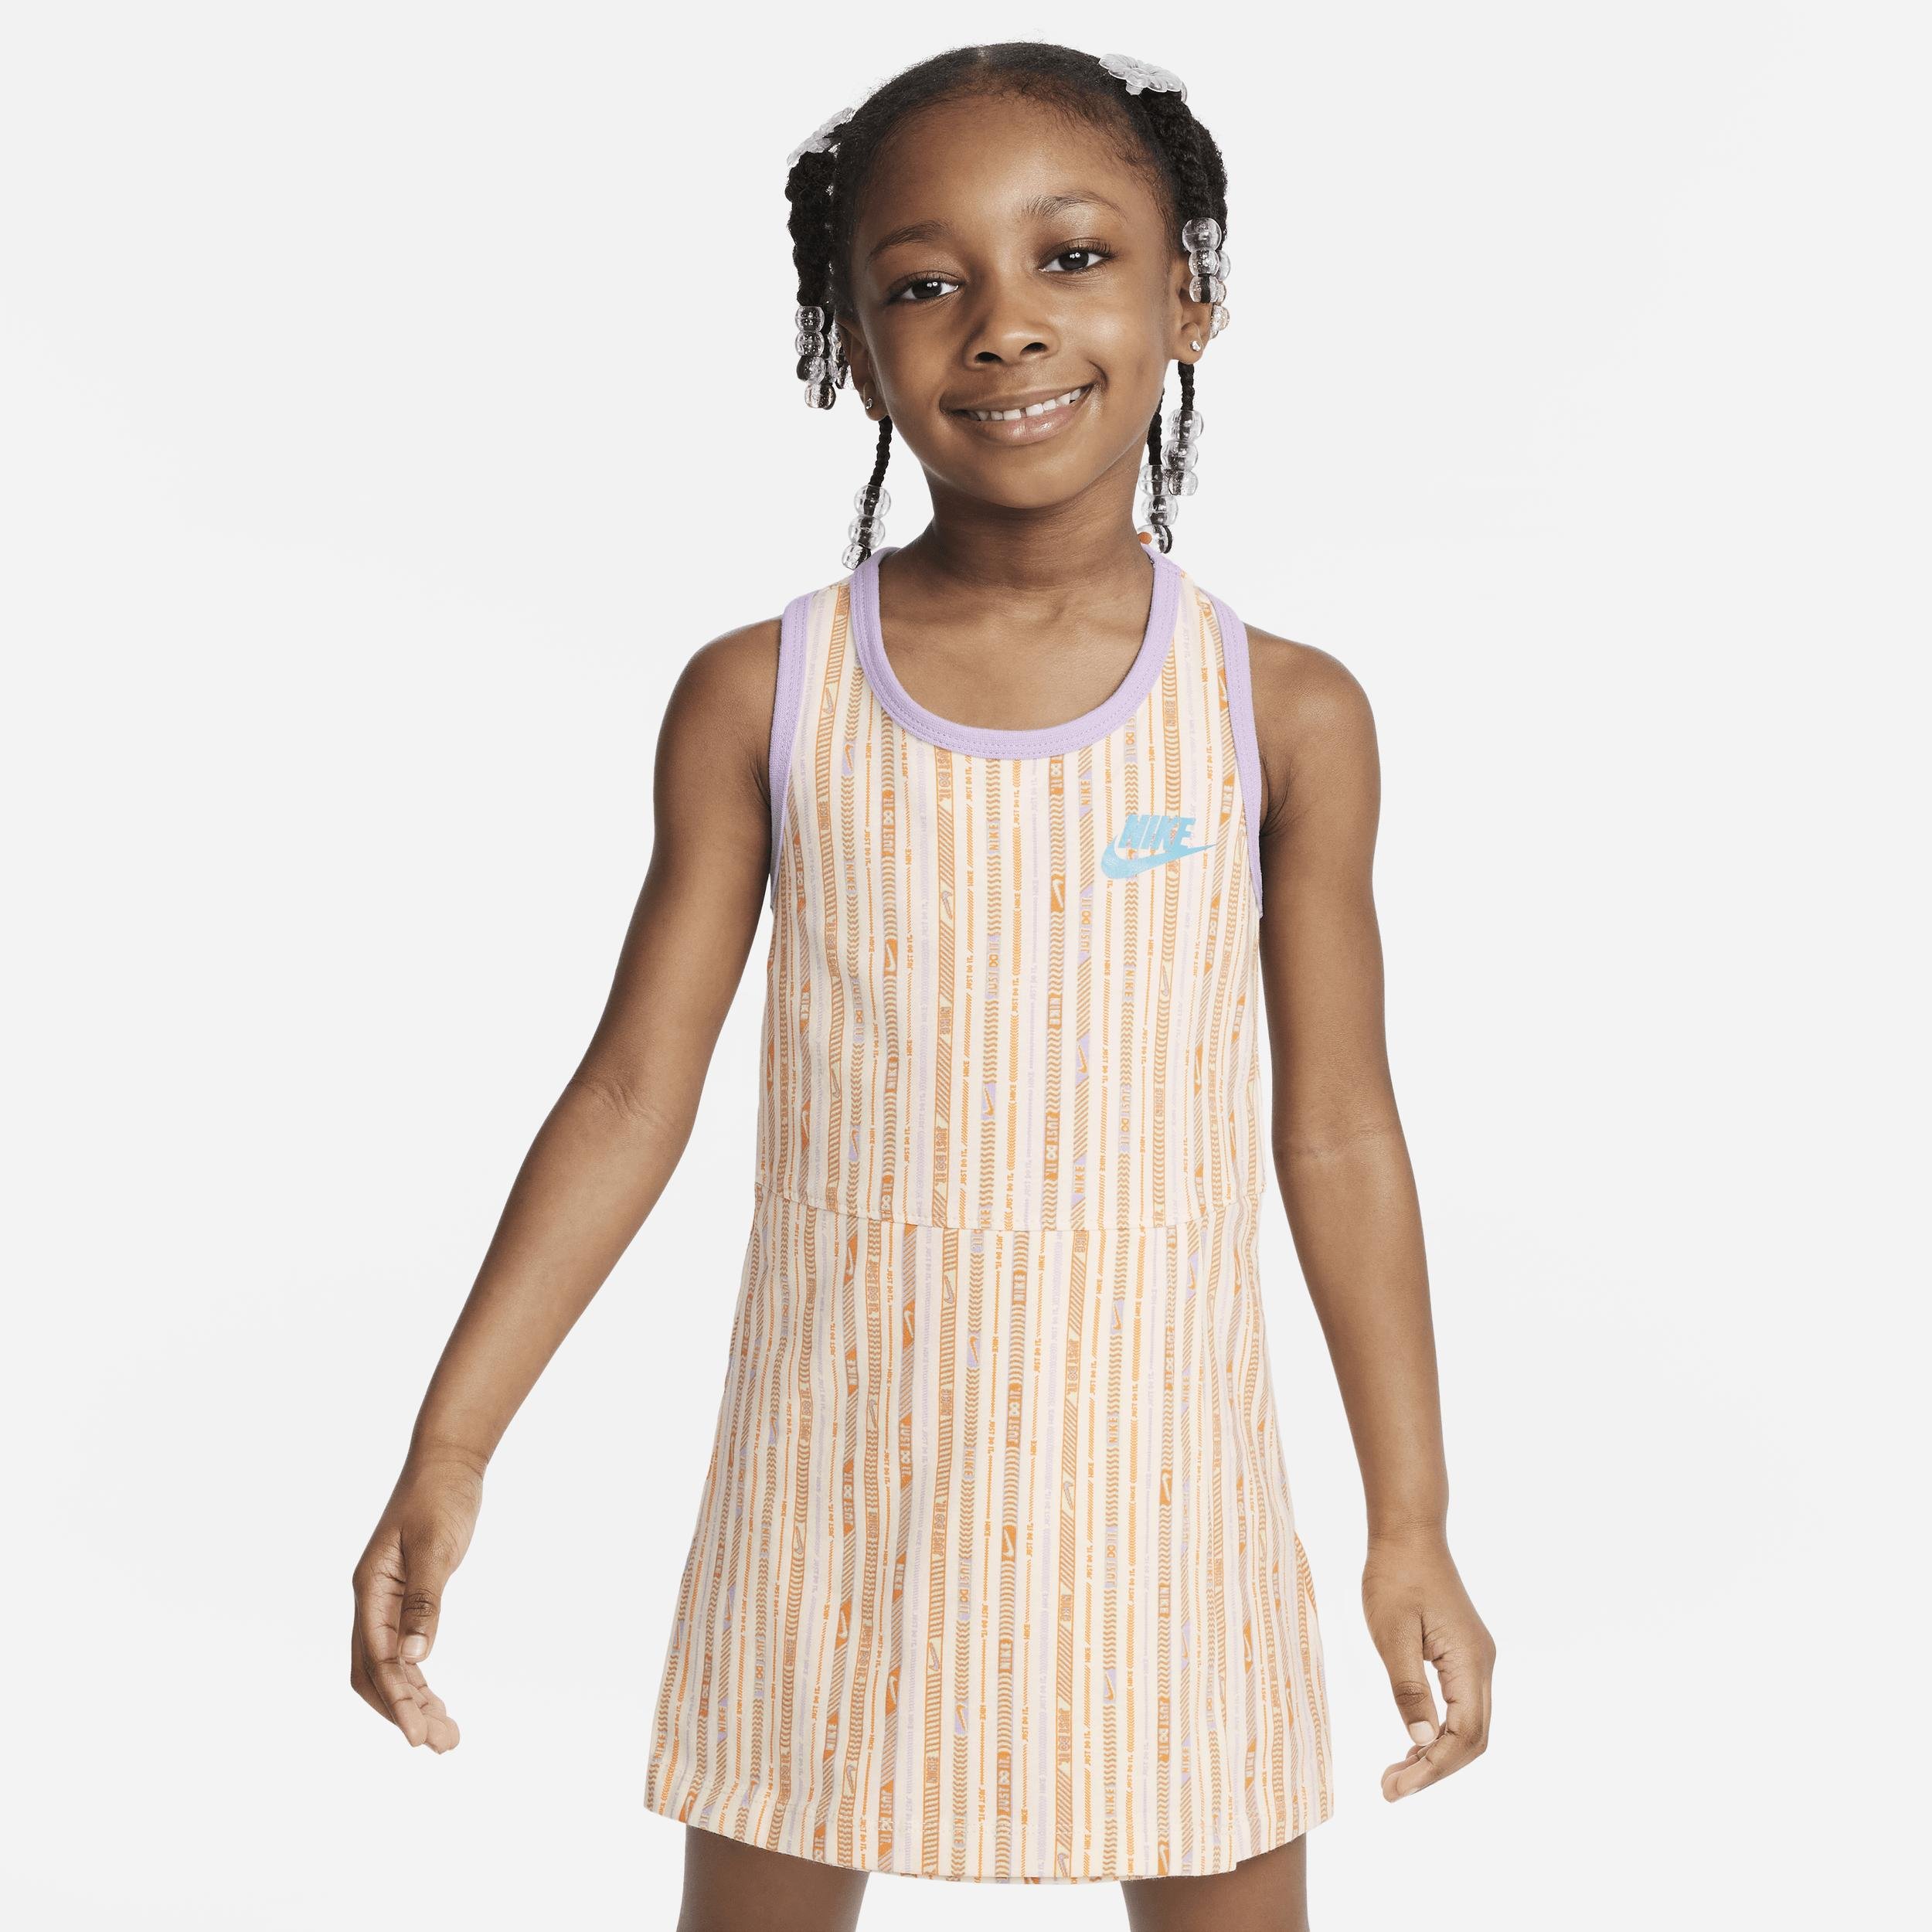 Nike Happy Camper Toddler Printed Dress by NIKE